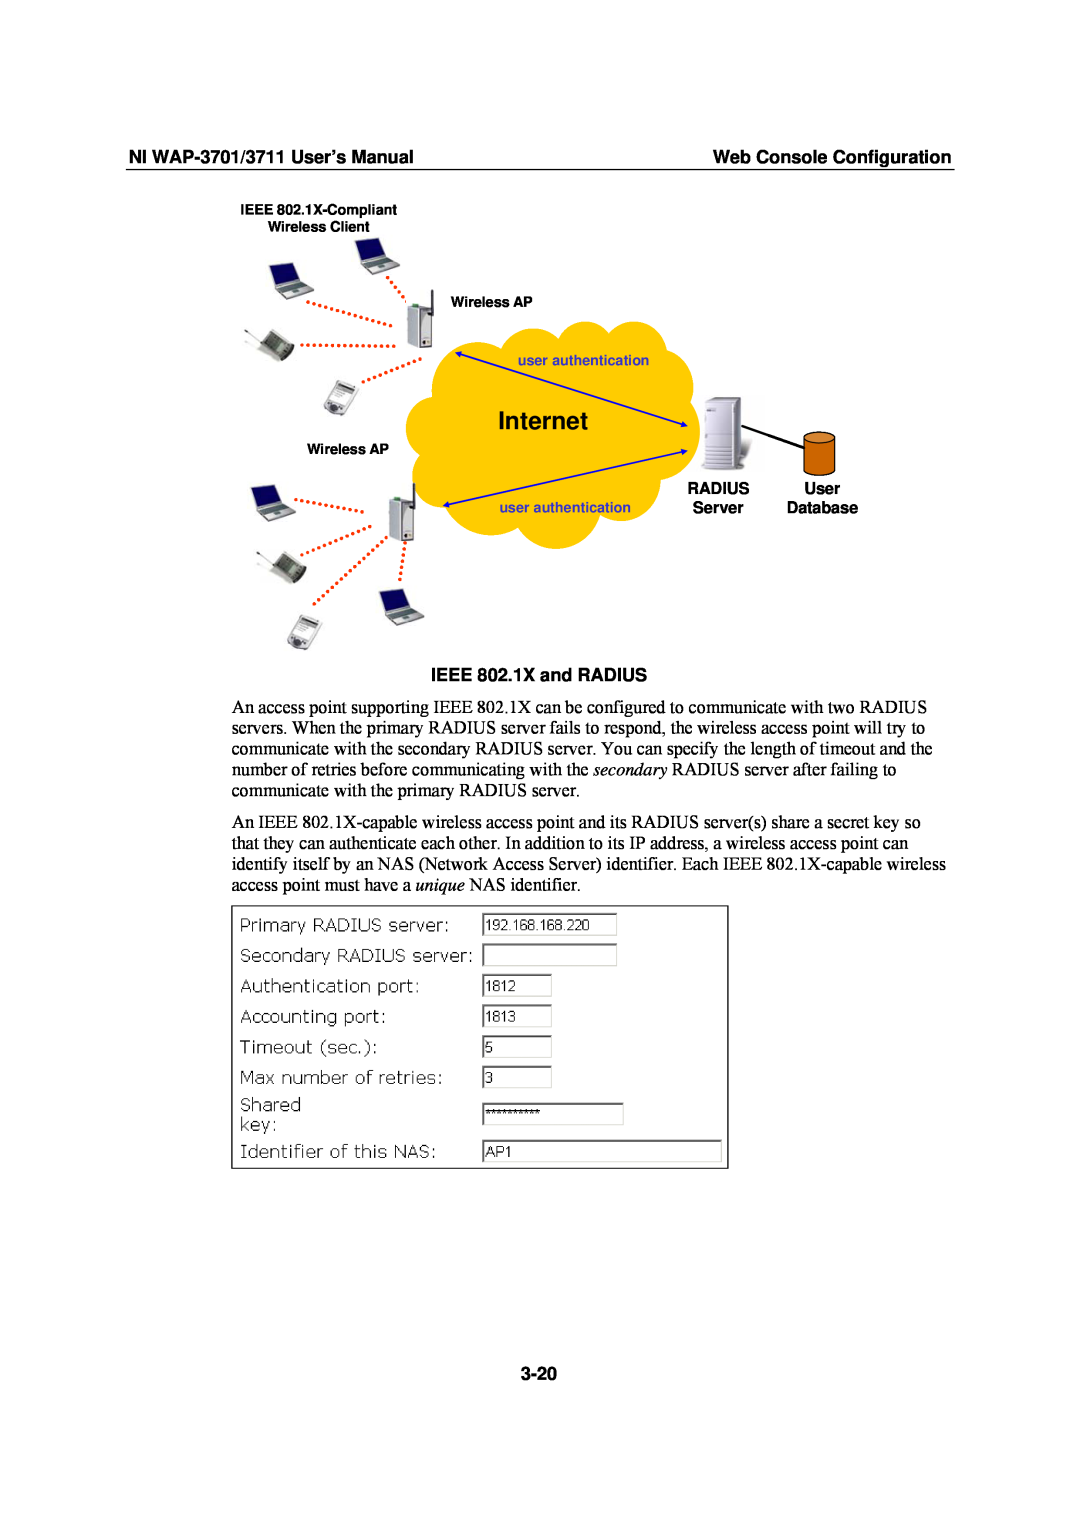 National Instruments Internet, NI WAP-3701/3711 User’s Manual, Web Console Configuration, IEEE 802.1X and RADIUS, 3-20 